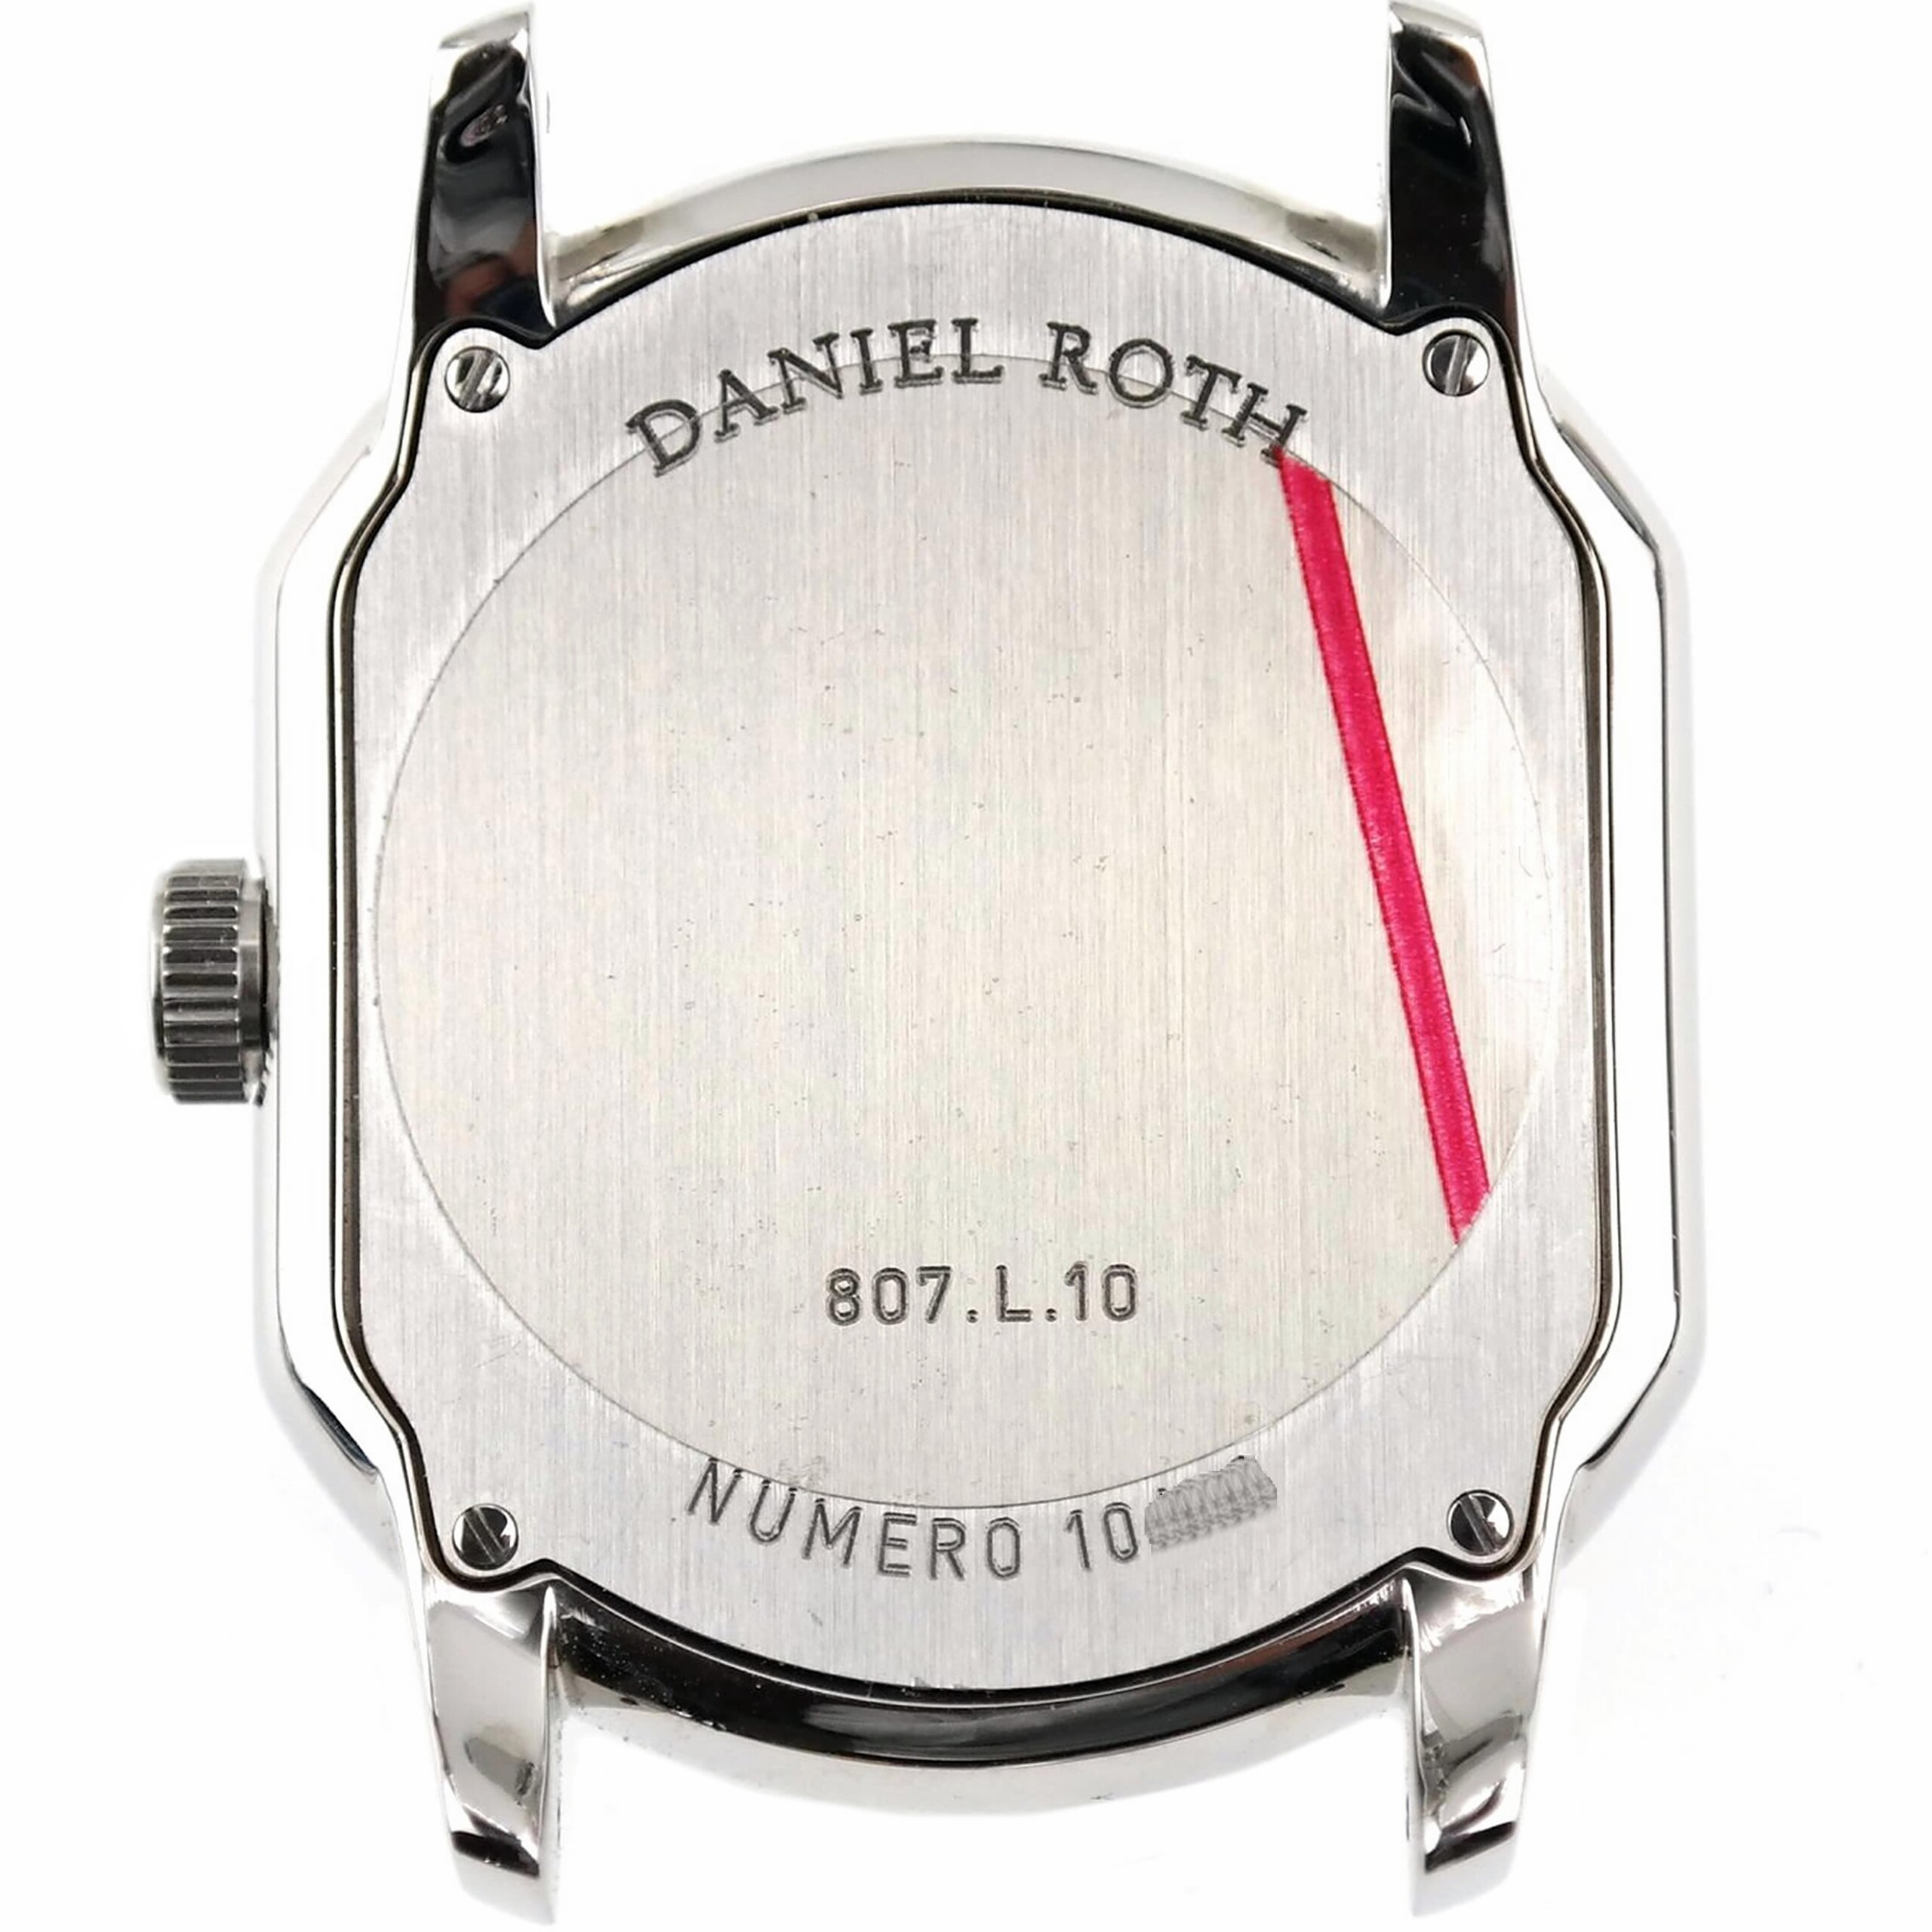 DANIEL ROTH - Premier Retrograde 807.L.10 - Watch Case